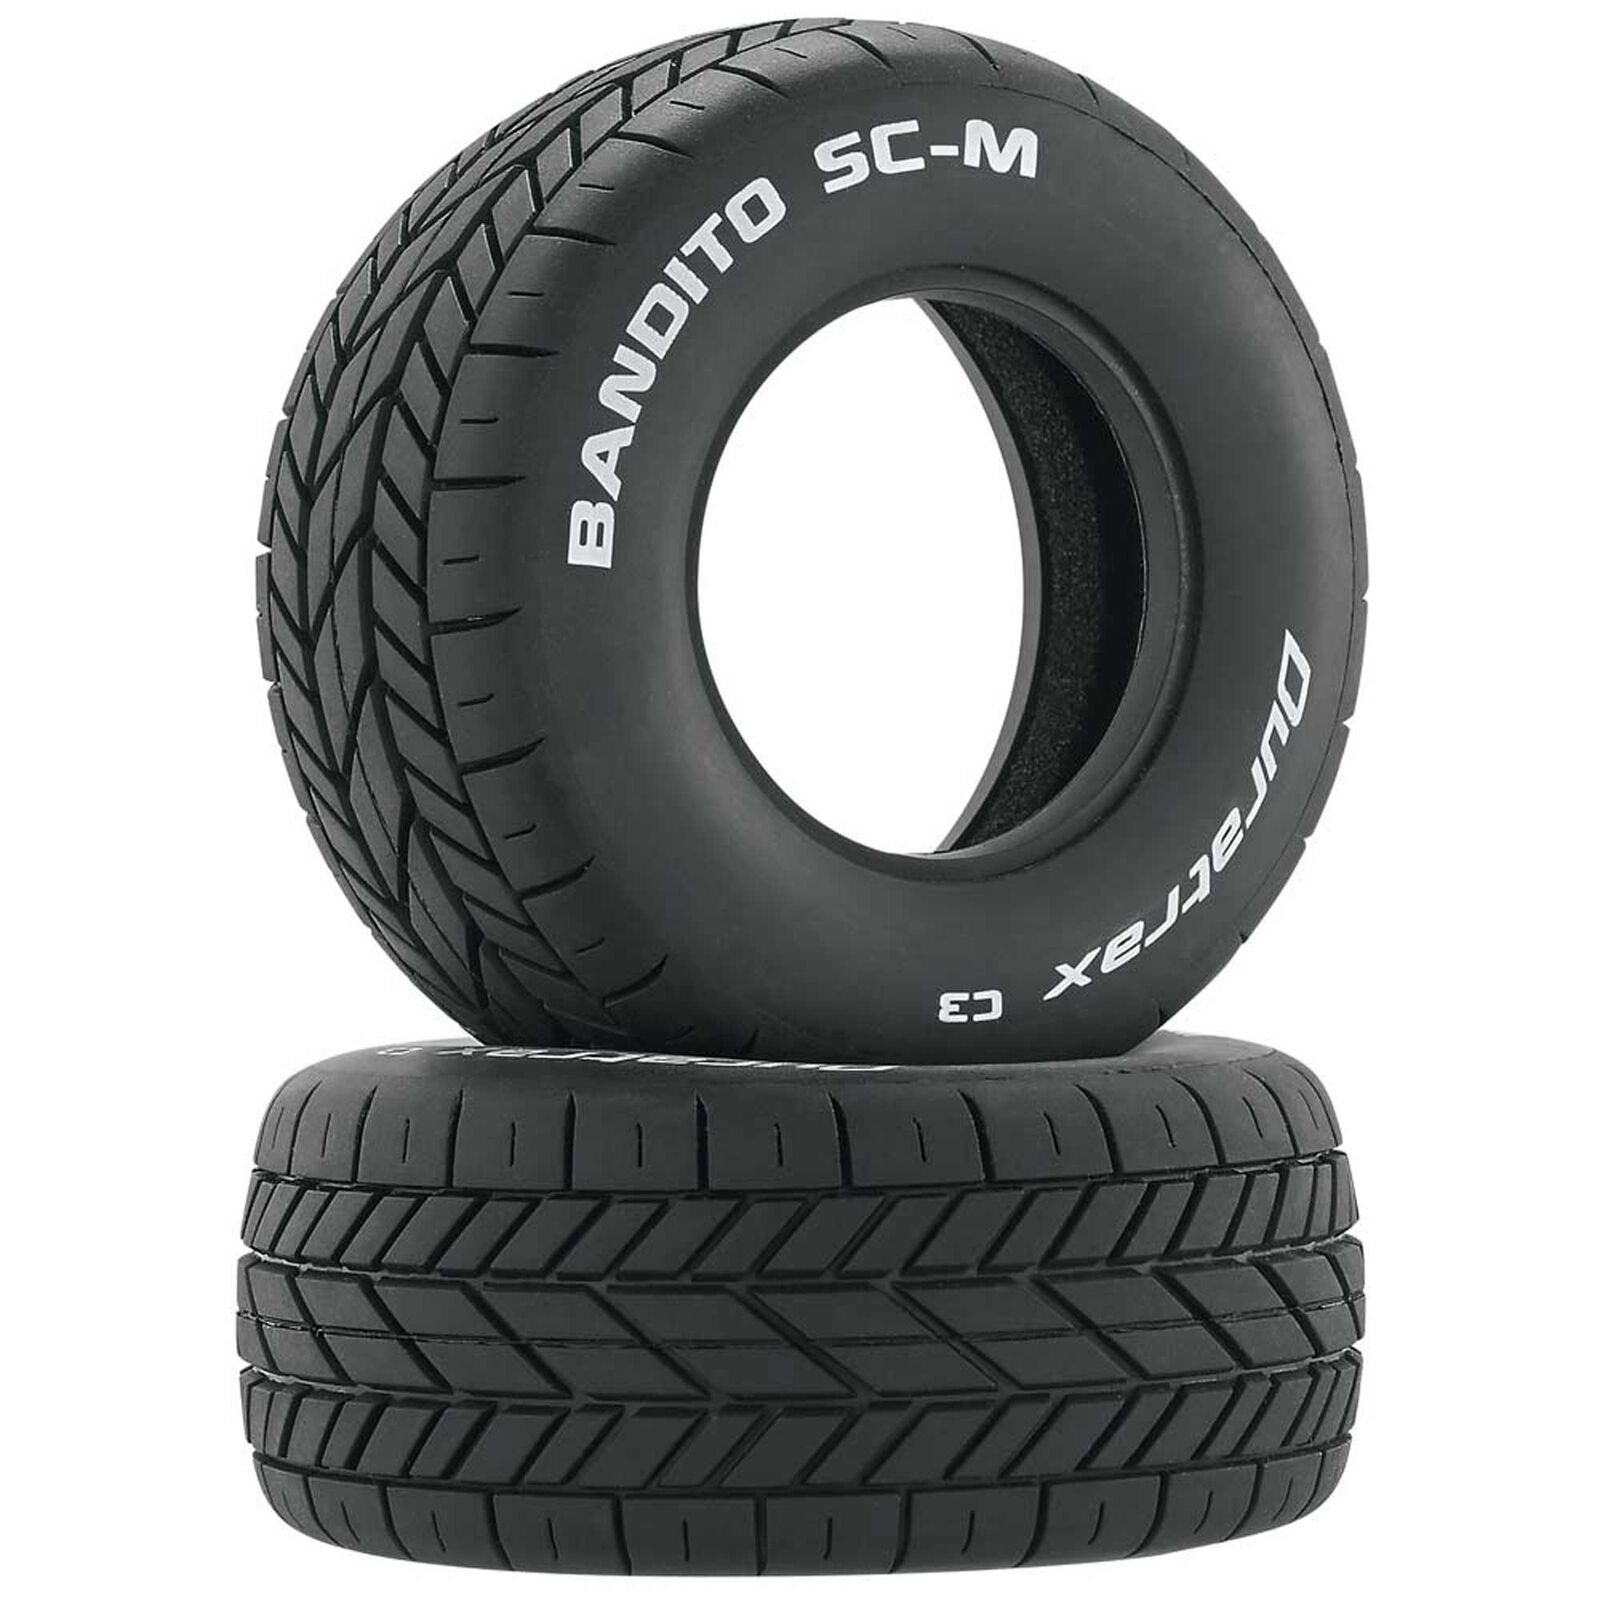 Bandito SC-M Oval Tires C3 (2)